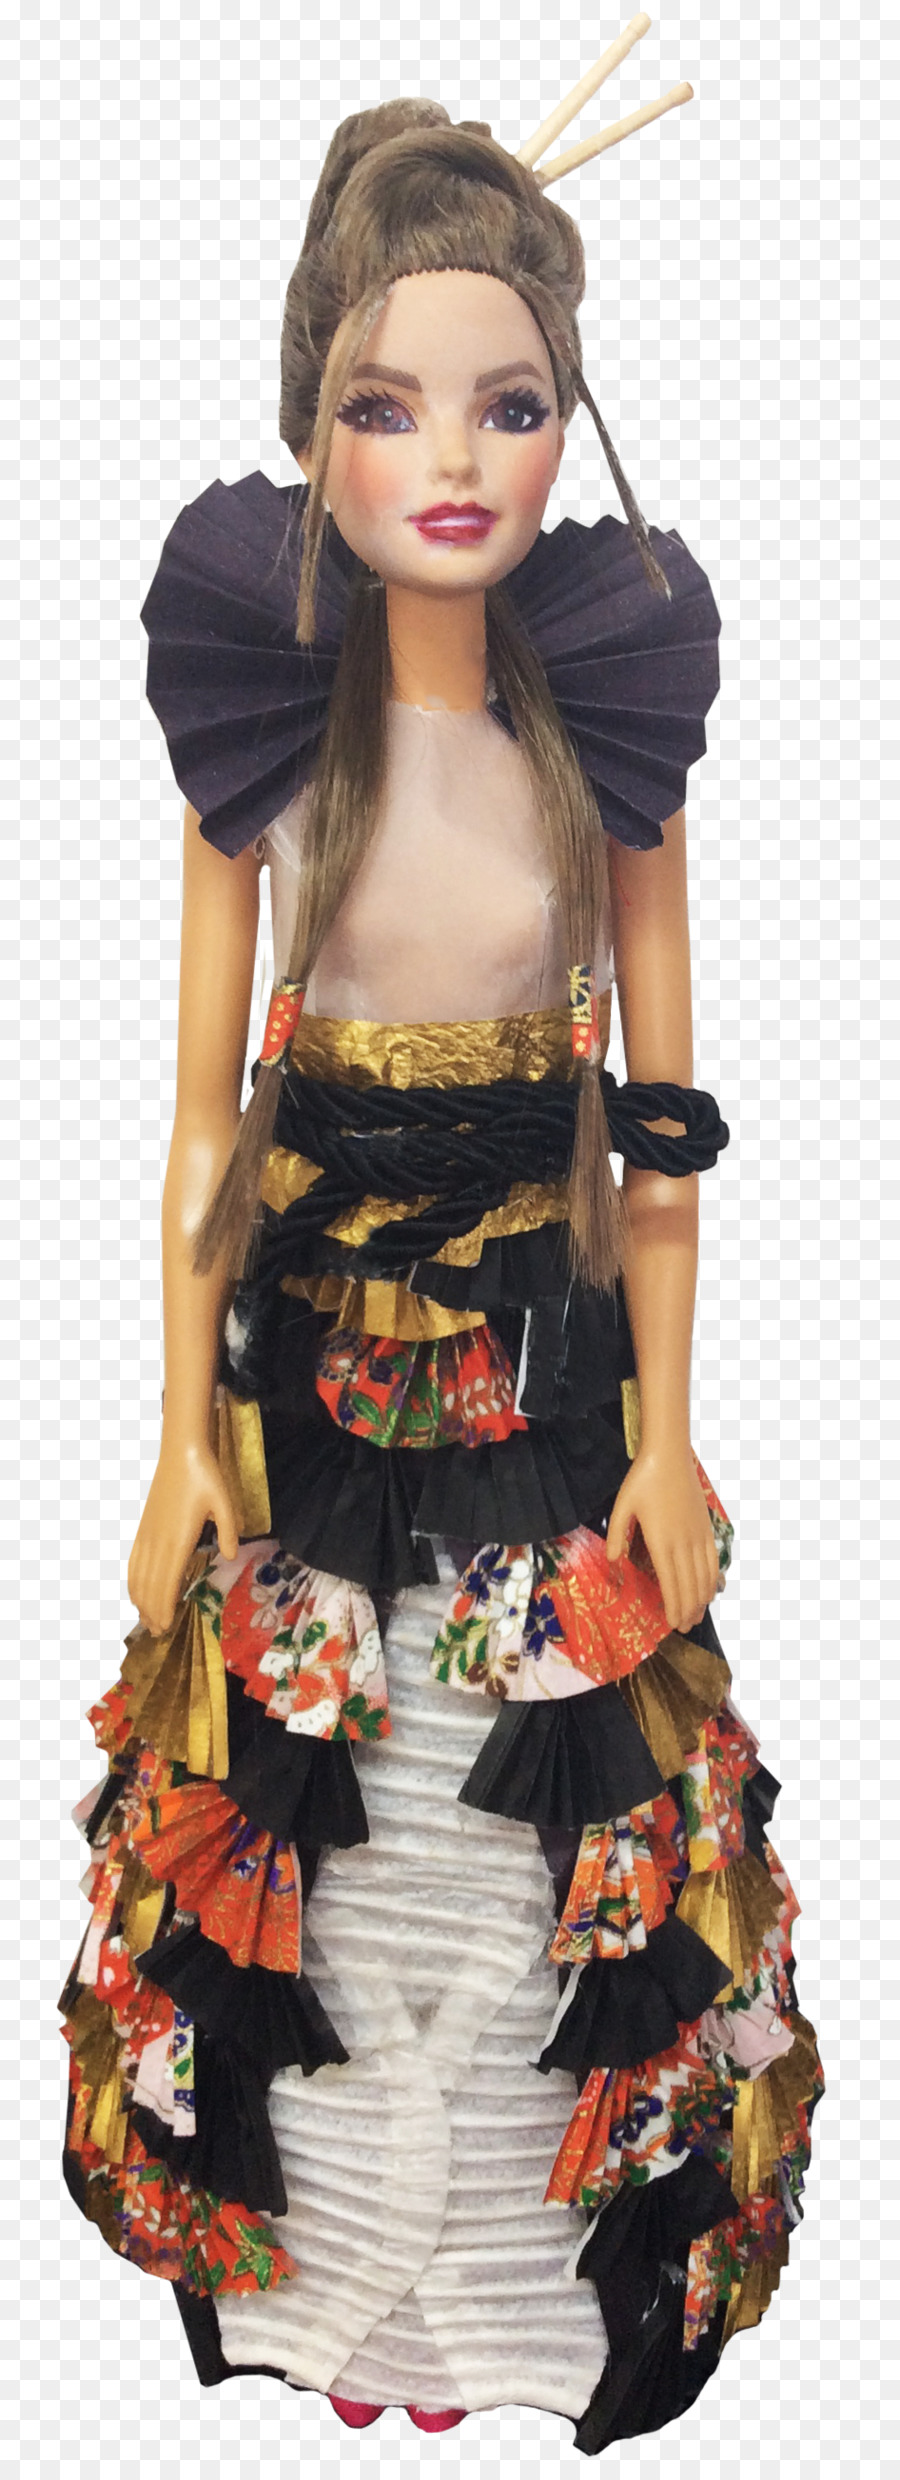 Barbie Fashion - Barbie